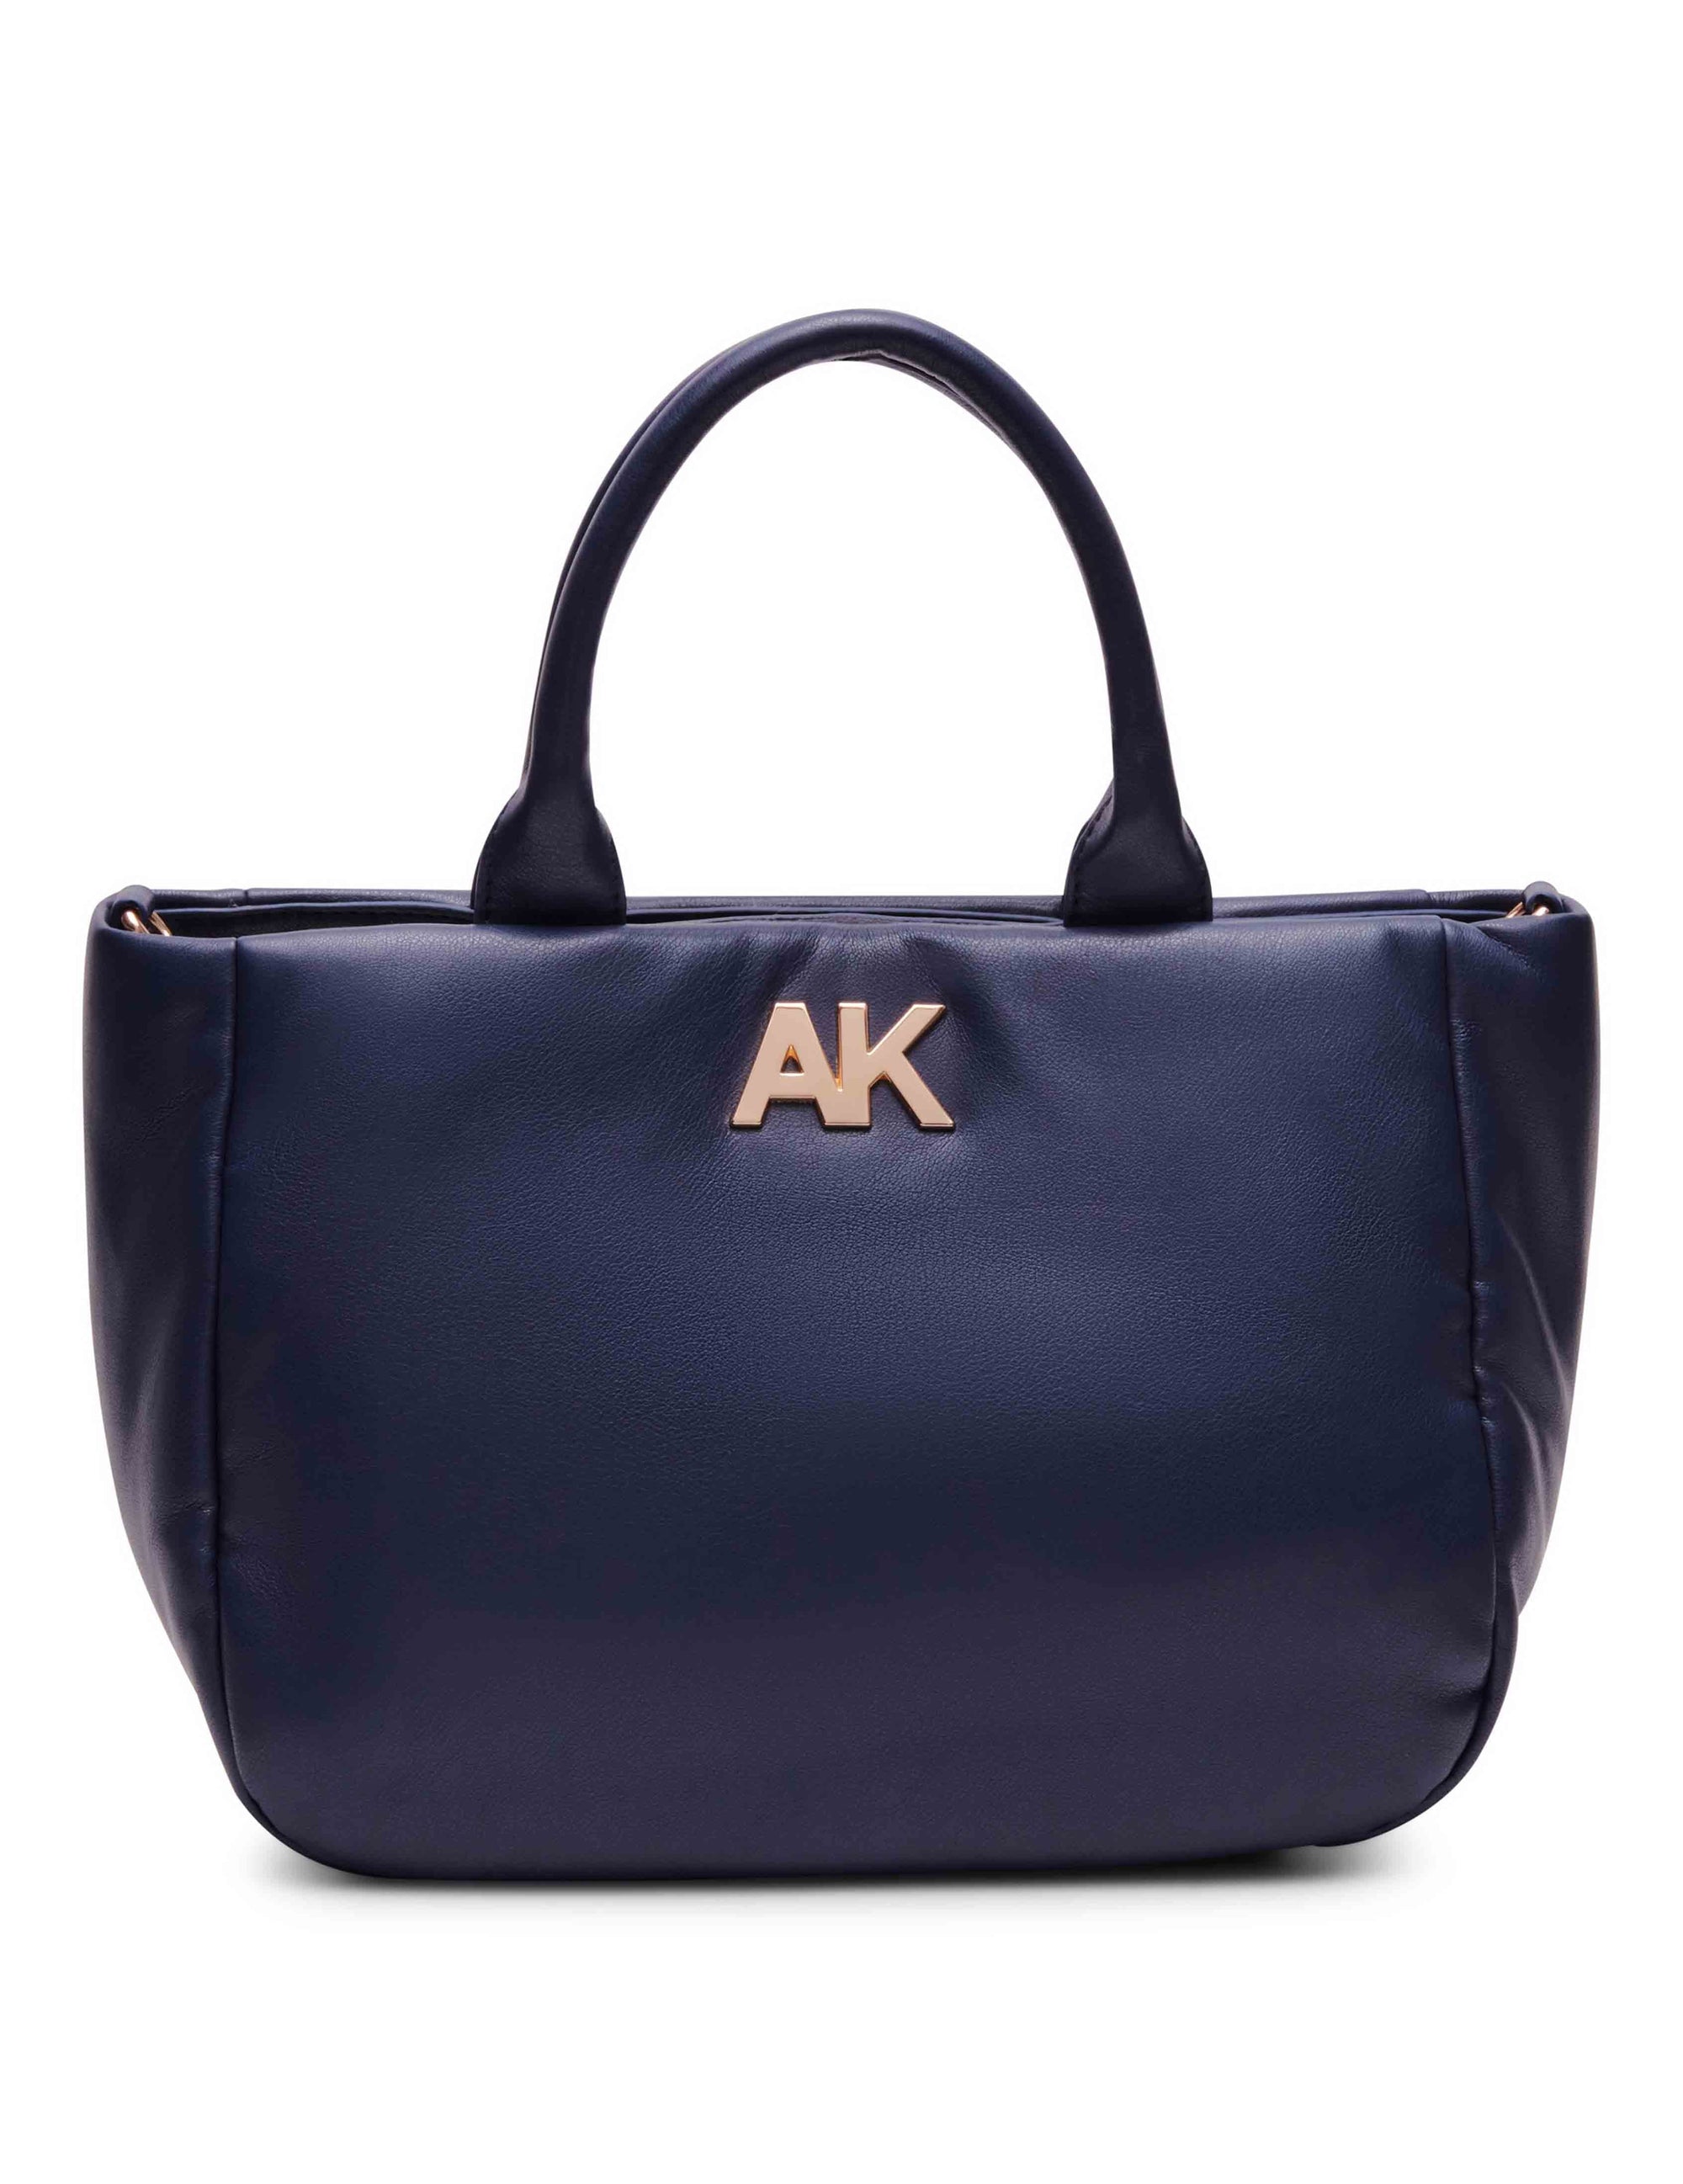 Anne Klein Light Blue Handbag - Gem